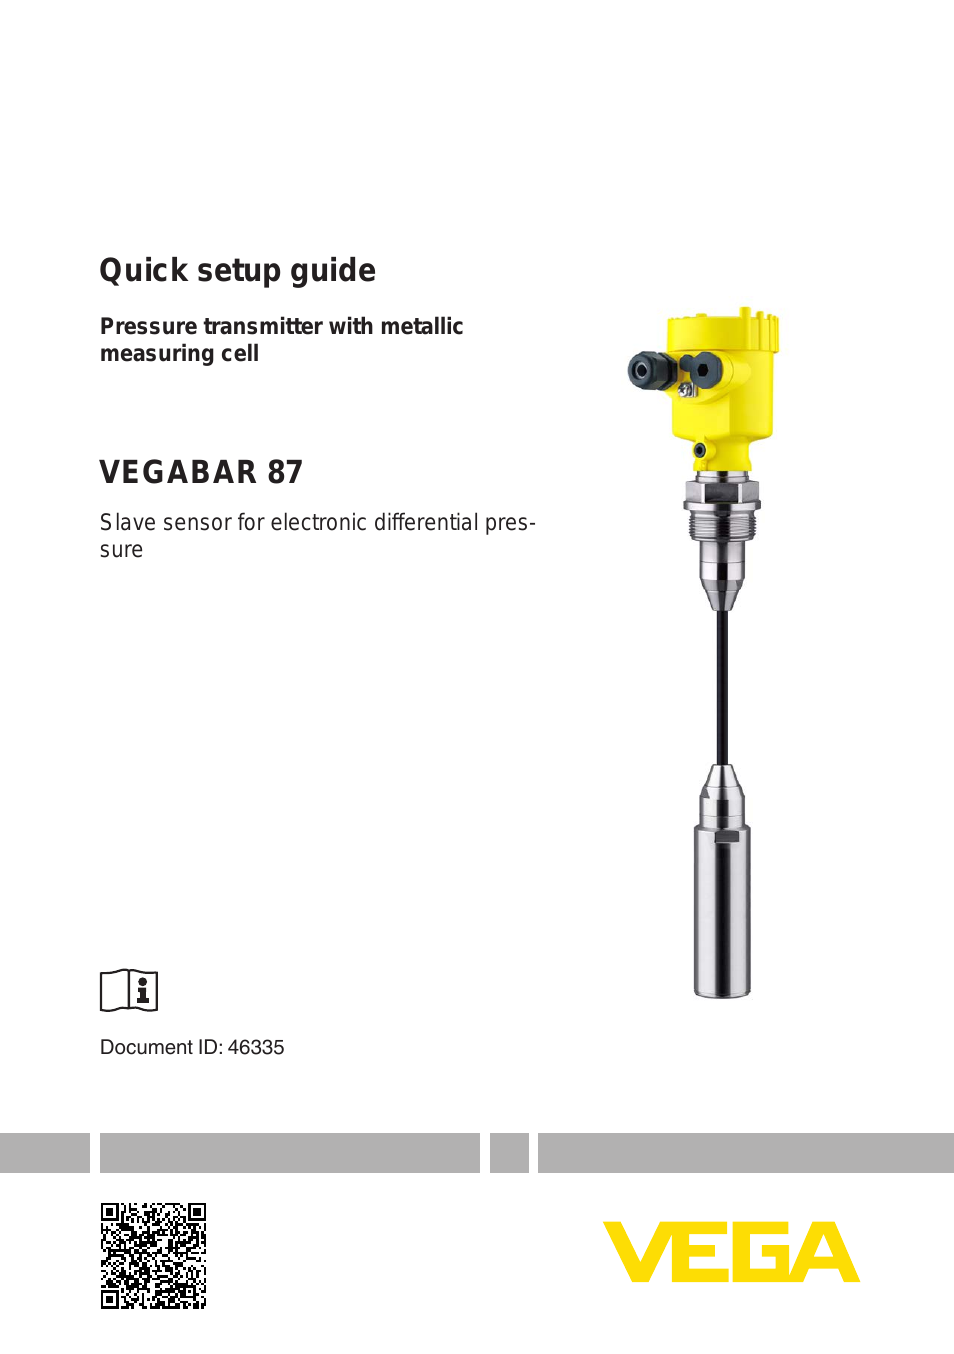 VEGABAR 87 Save sensor - Quick setup guide